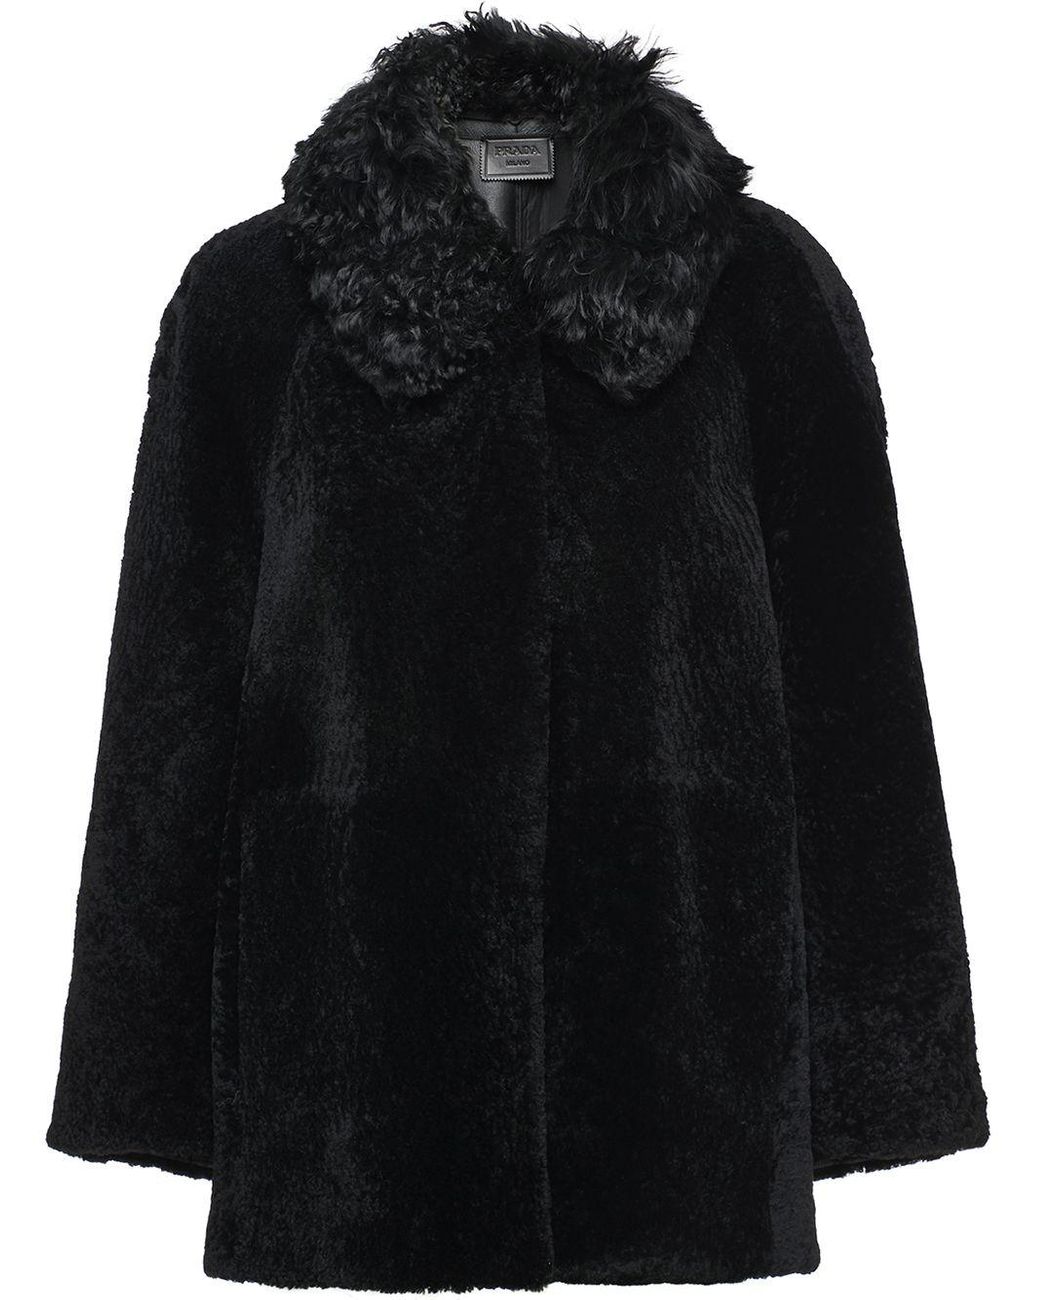 Prada Shearling Fur Jacket in Black - Lyst